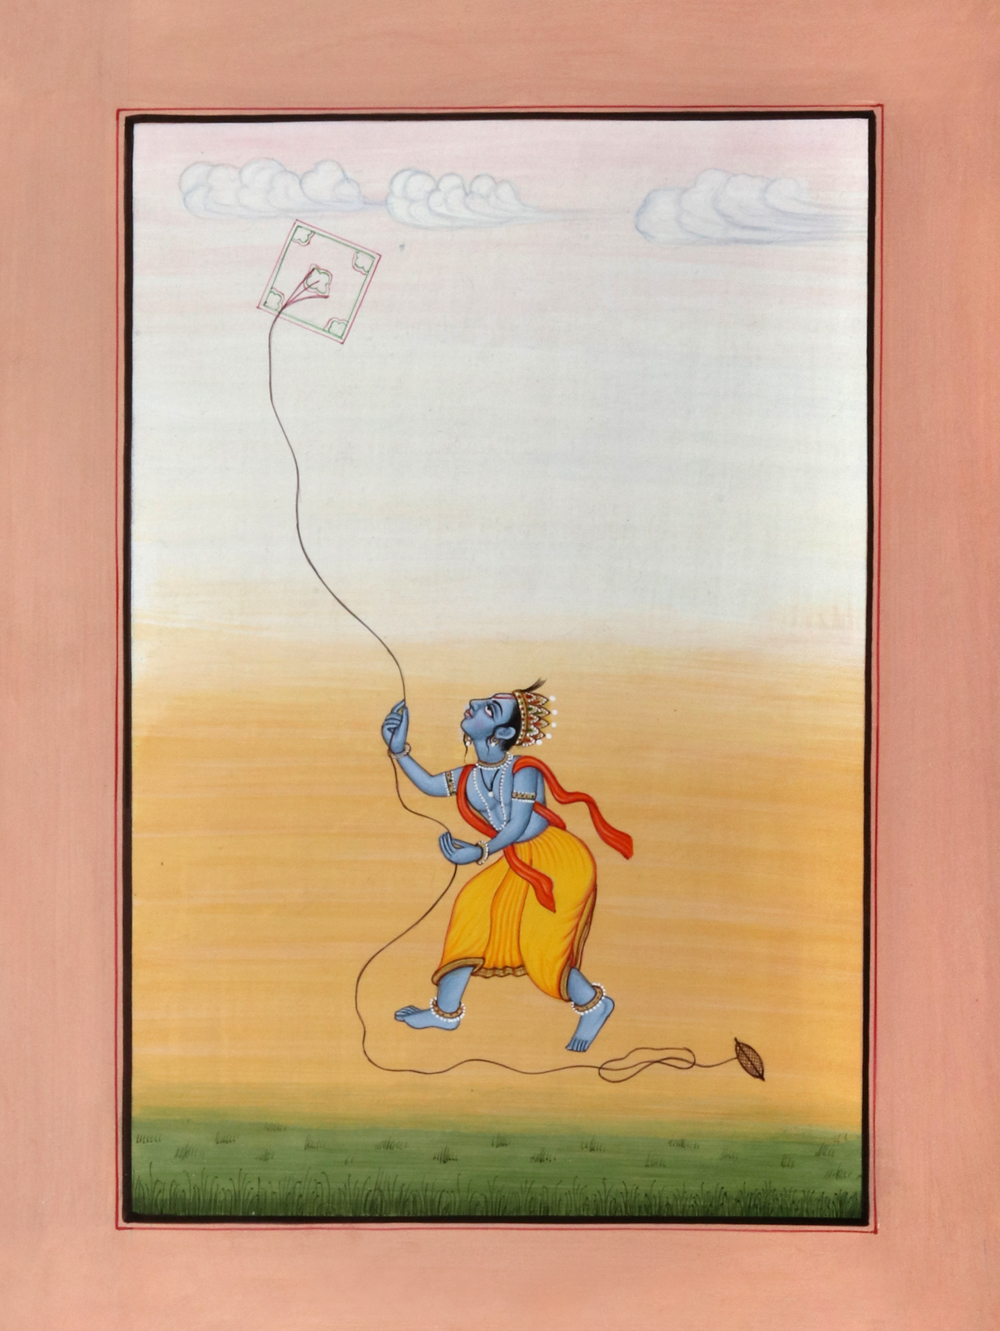 Vrindavan Cowherd Flies A Kite | Exotic India Art